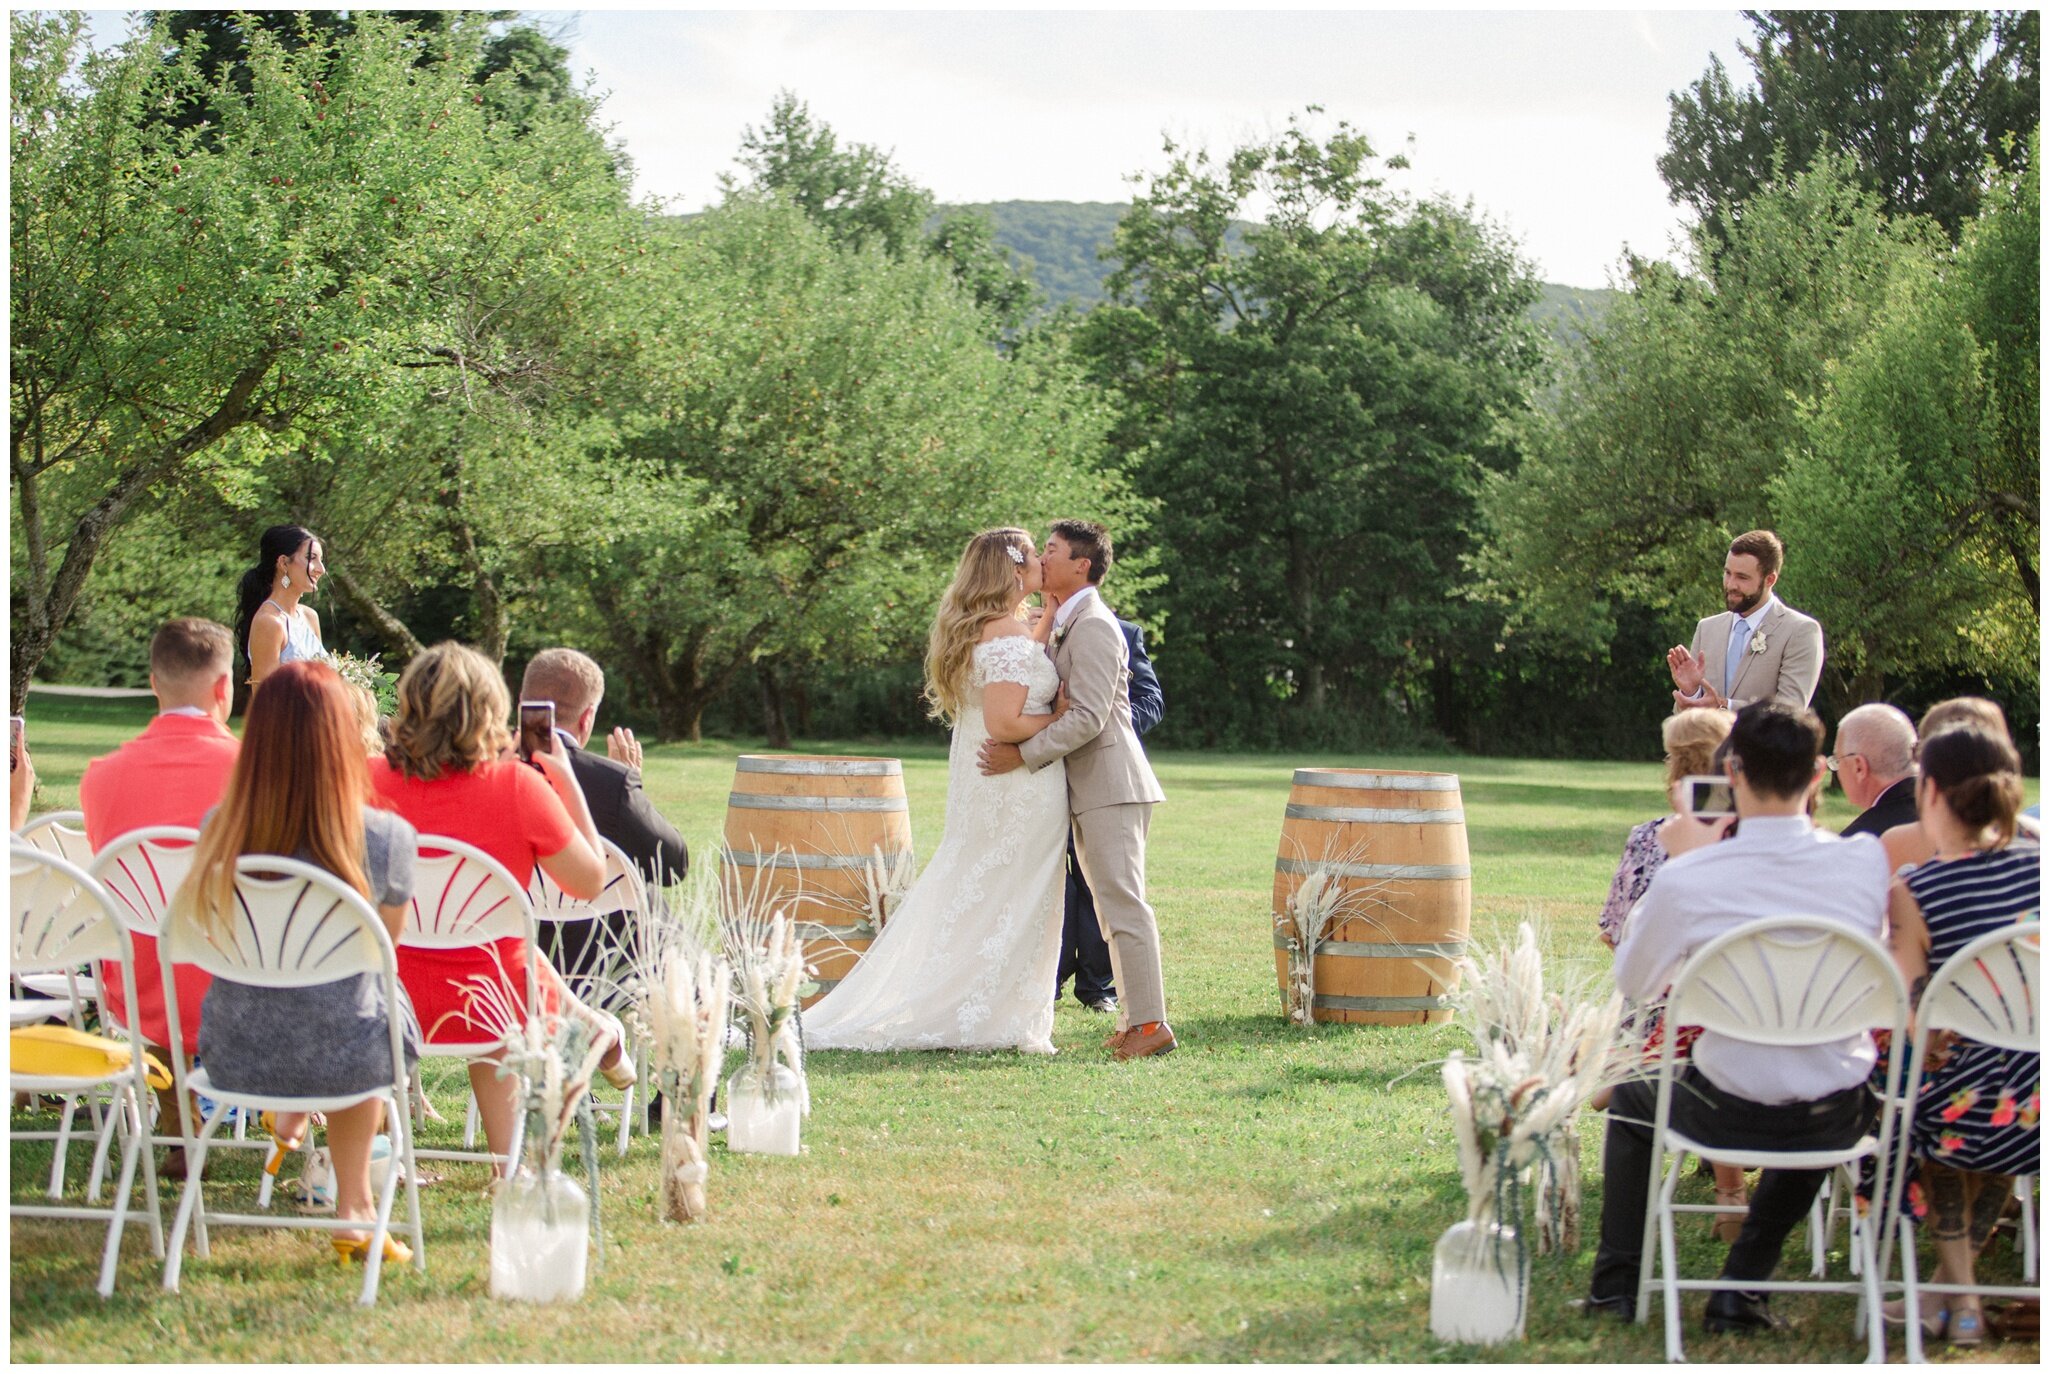 Maiolatesi's Winery Summer Wedding Photos_0024.jpg